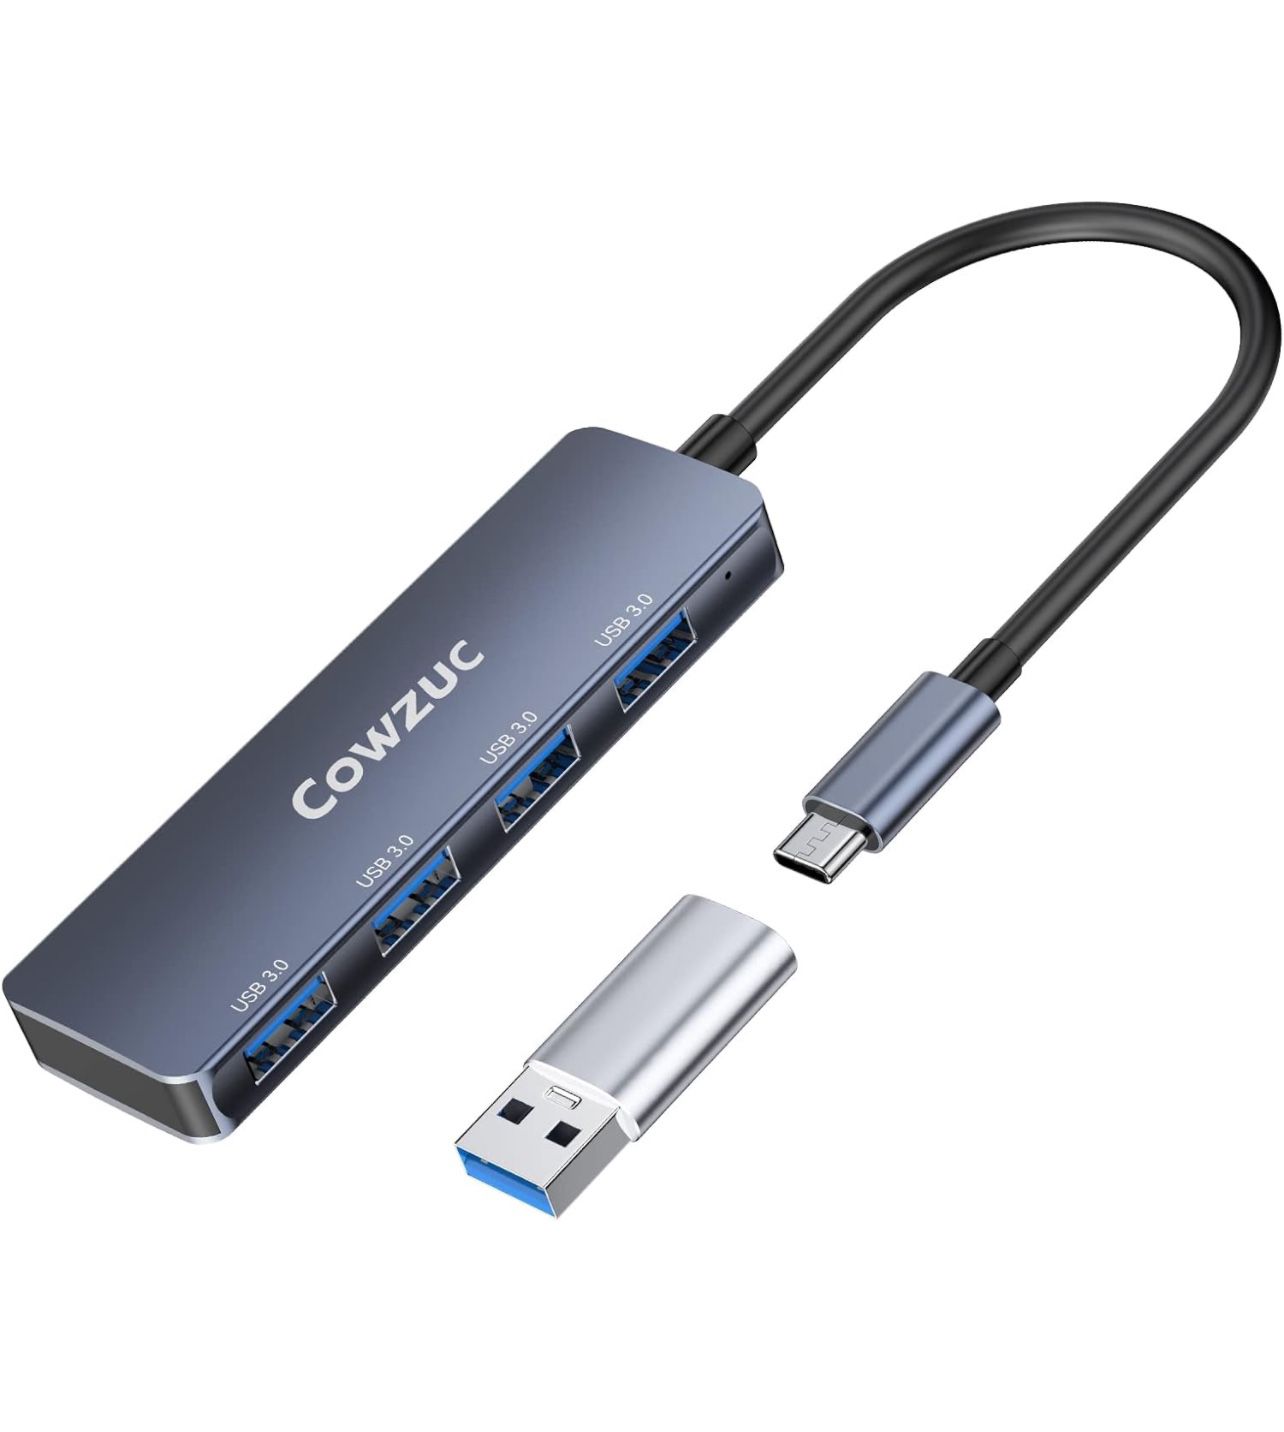 Brandnew USB C Hub 4 Ports 3.0, USB C to USB Hub, 4Ports 3.0 USB Adapter Docking Station for iMac, MacBook Pro/Air, Mac, Ipad Pro, Surface, Chromebook